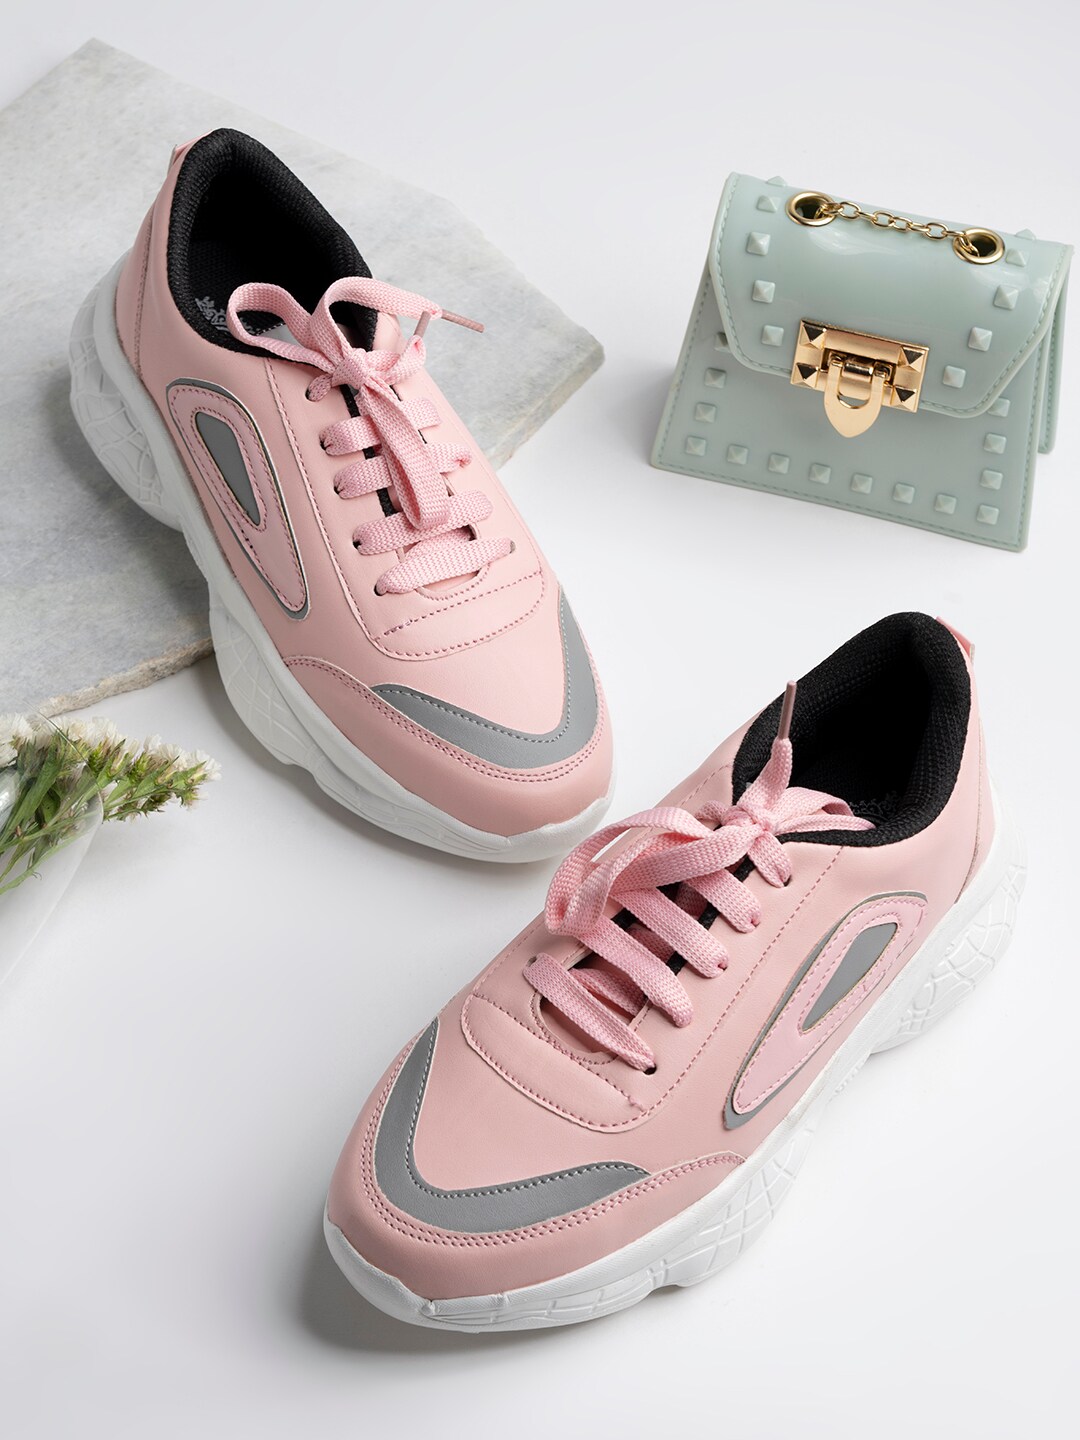 Shoetopia Women Pink Sneakers Price in India